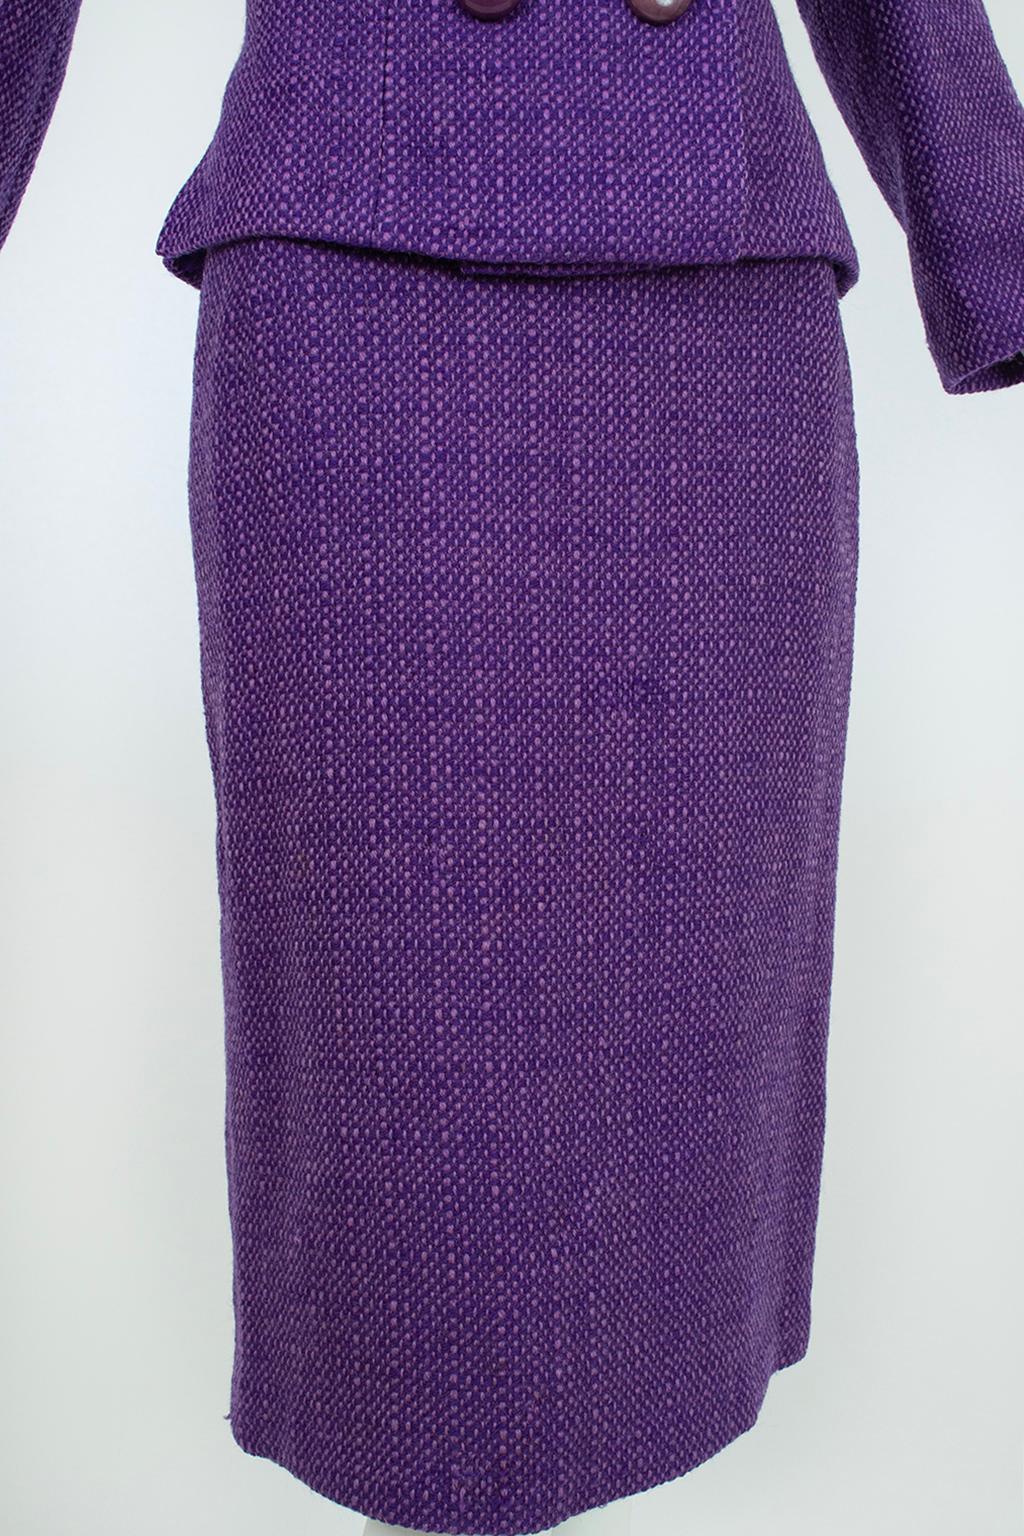 Purple Wool Tweed Portrait Collar ¾ Pencil Suit and Inverness Coat – M, 1950s 5